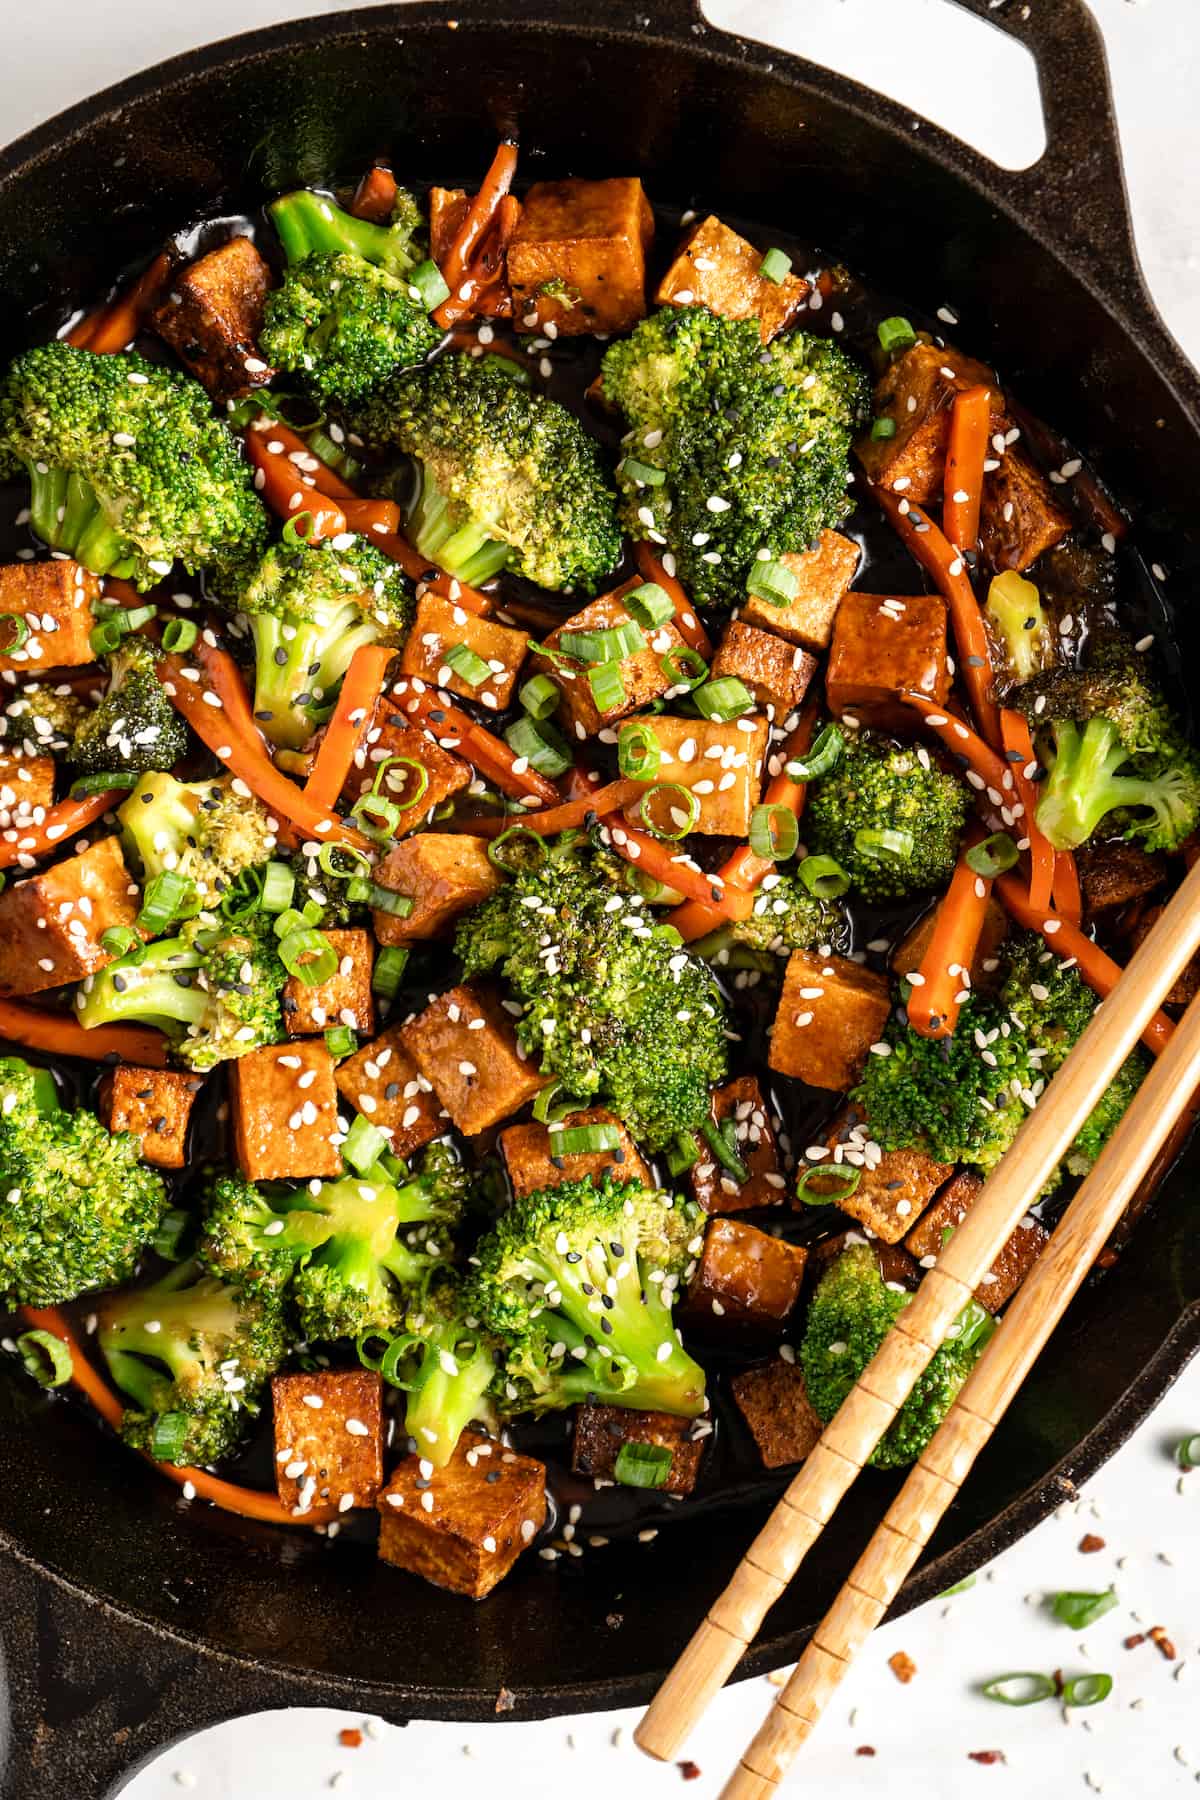 II. Benefits of Making Stir-Fry with Tofu and Veggies